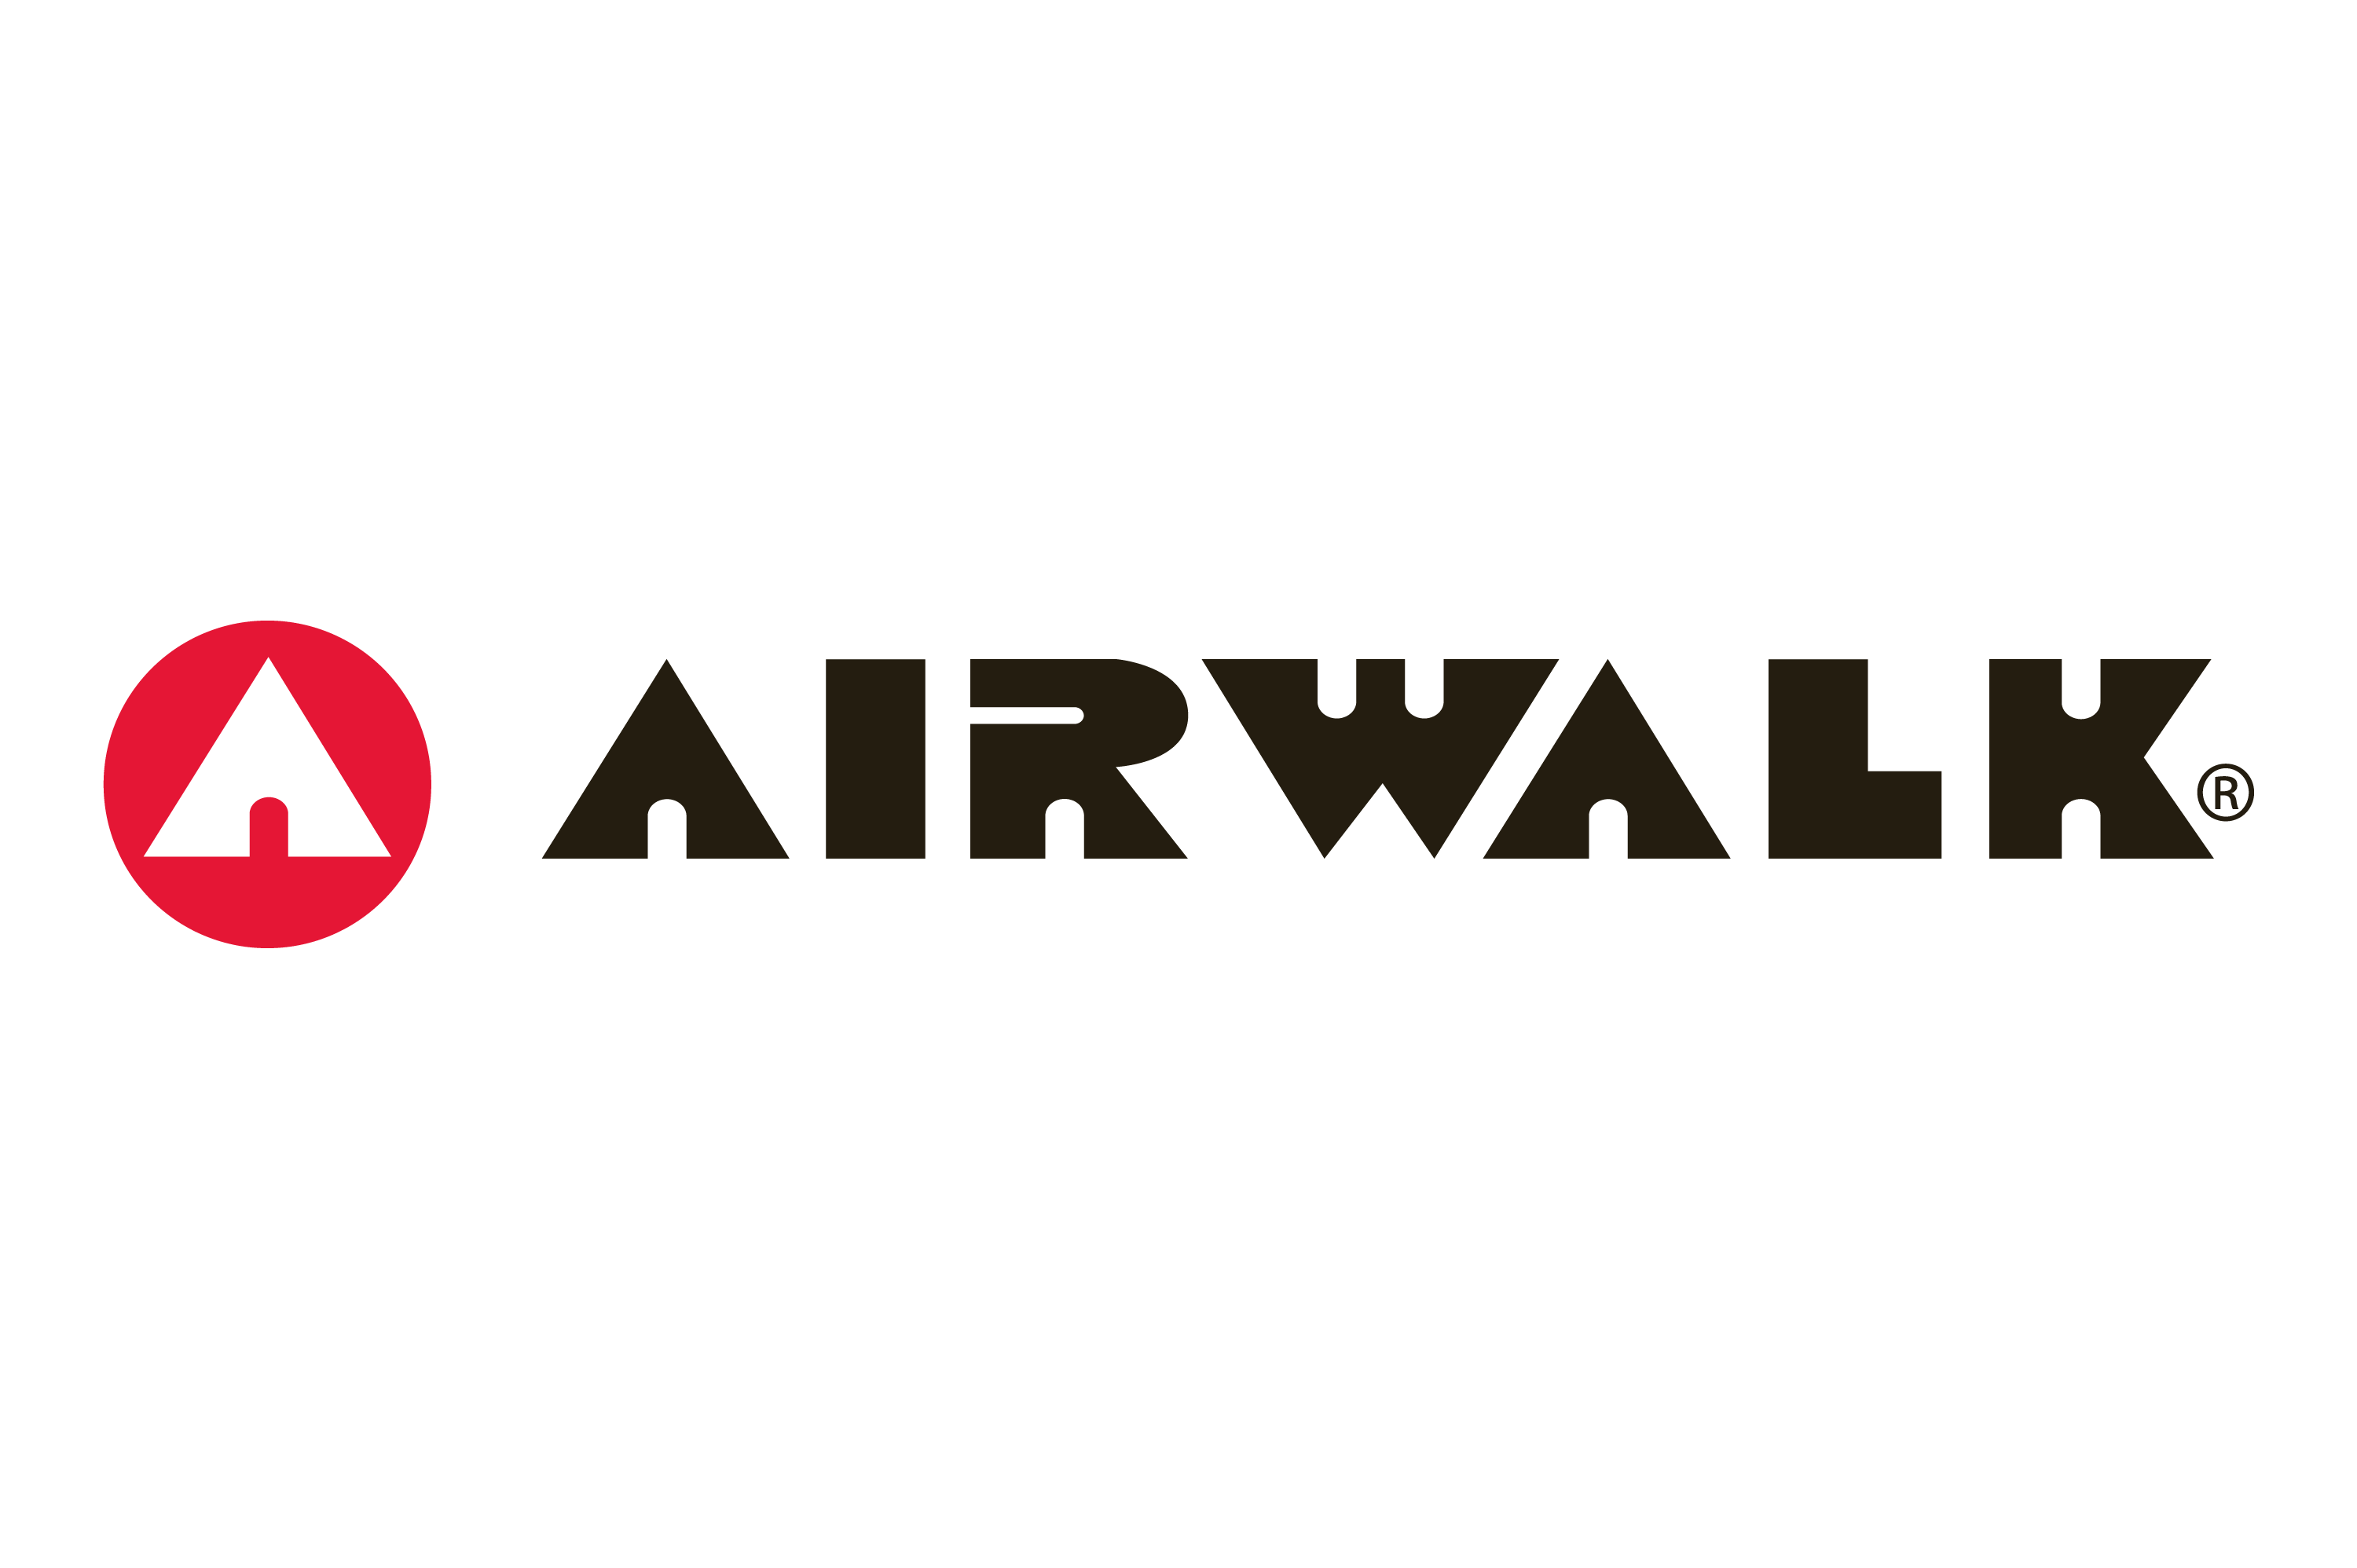 Airwalk